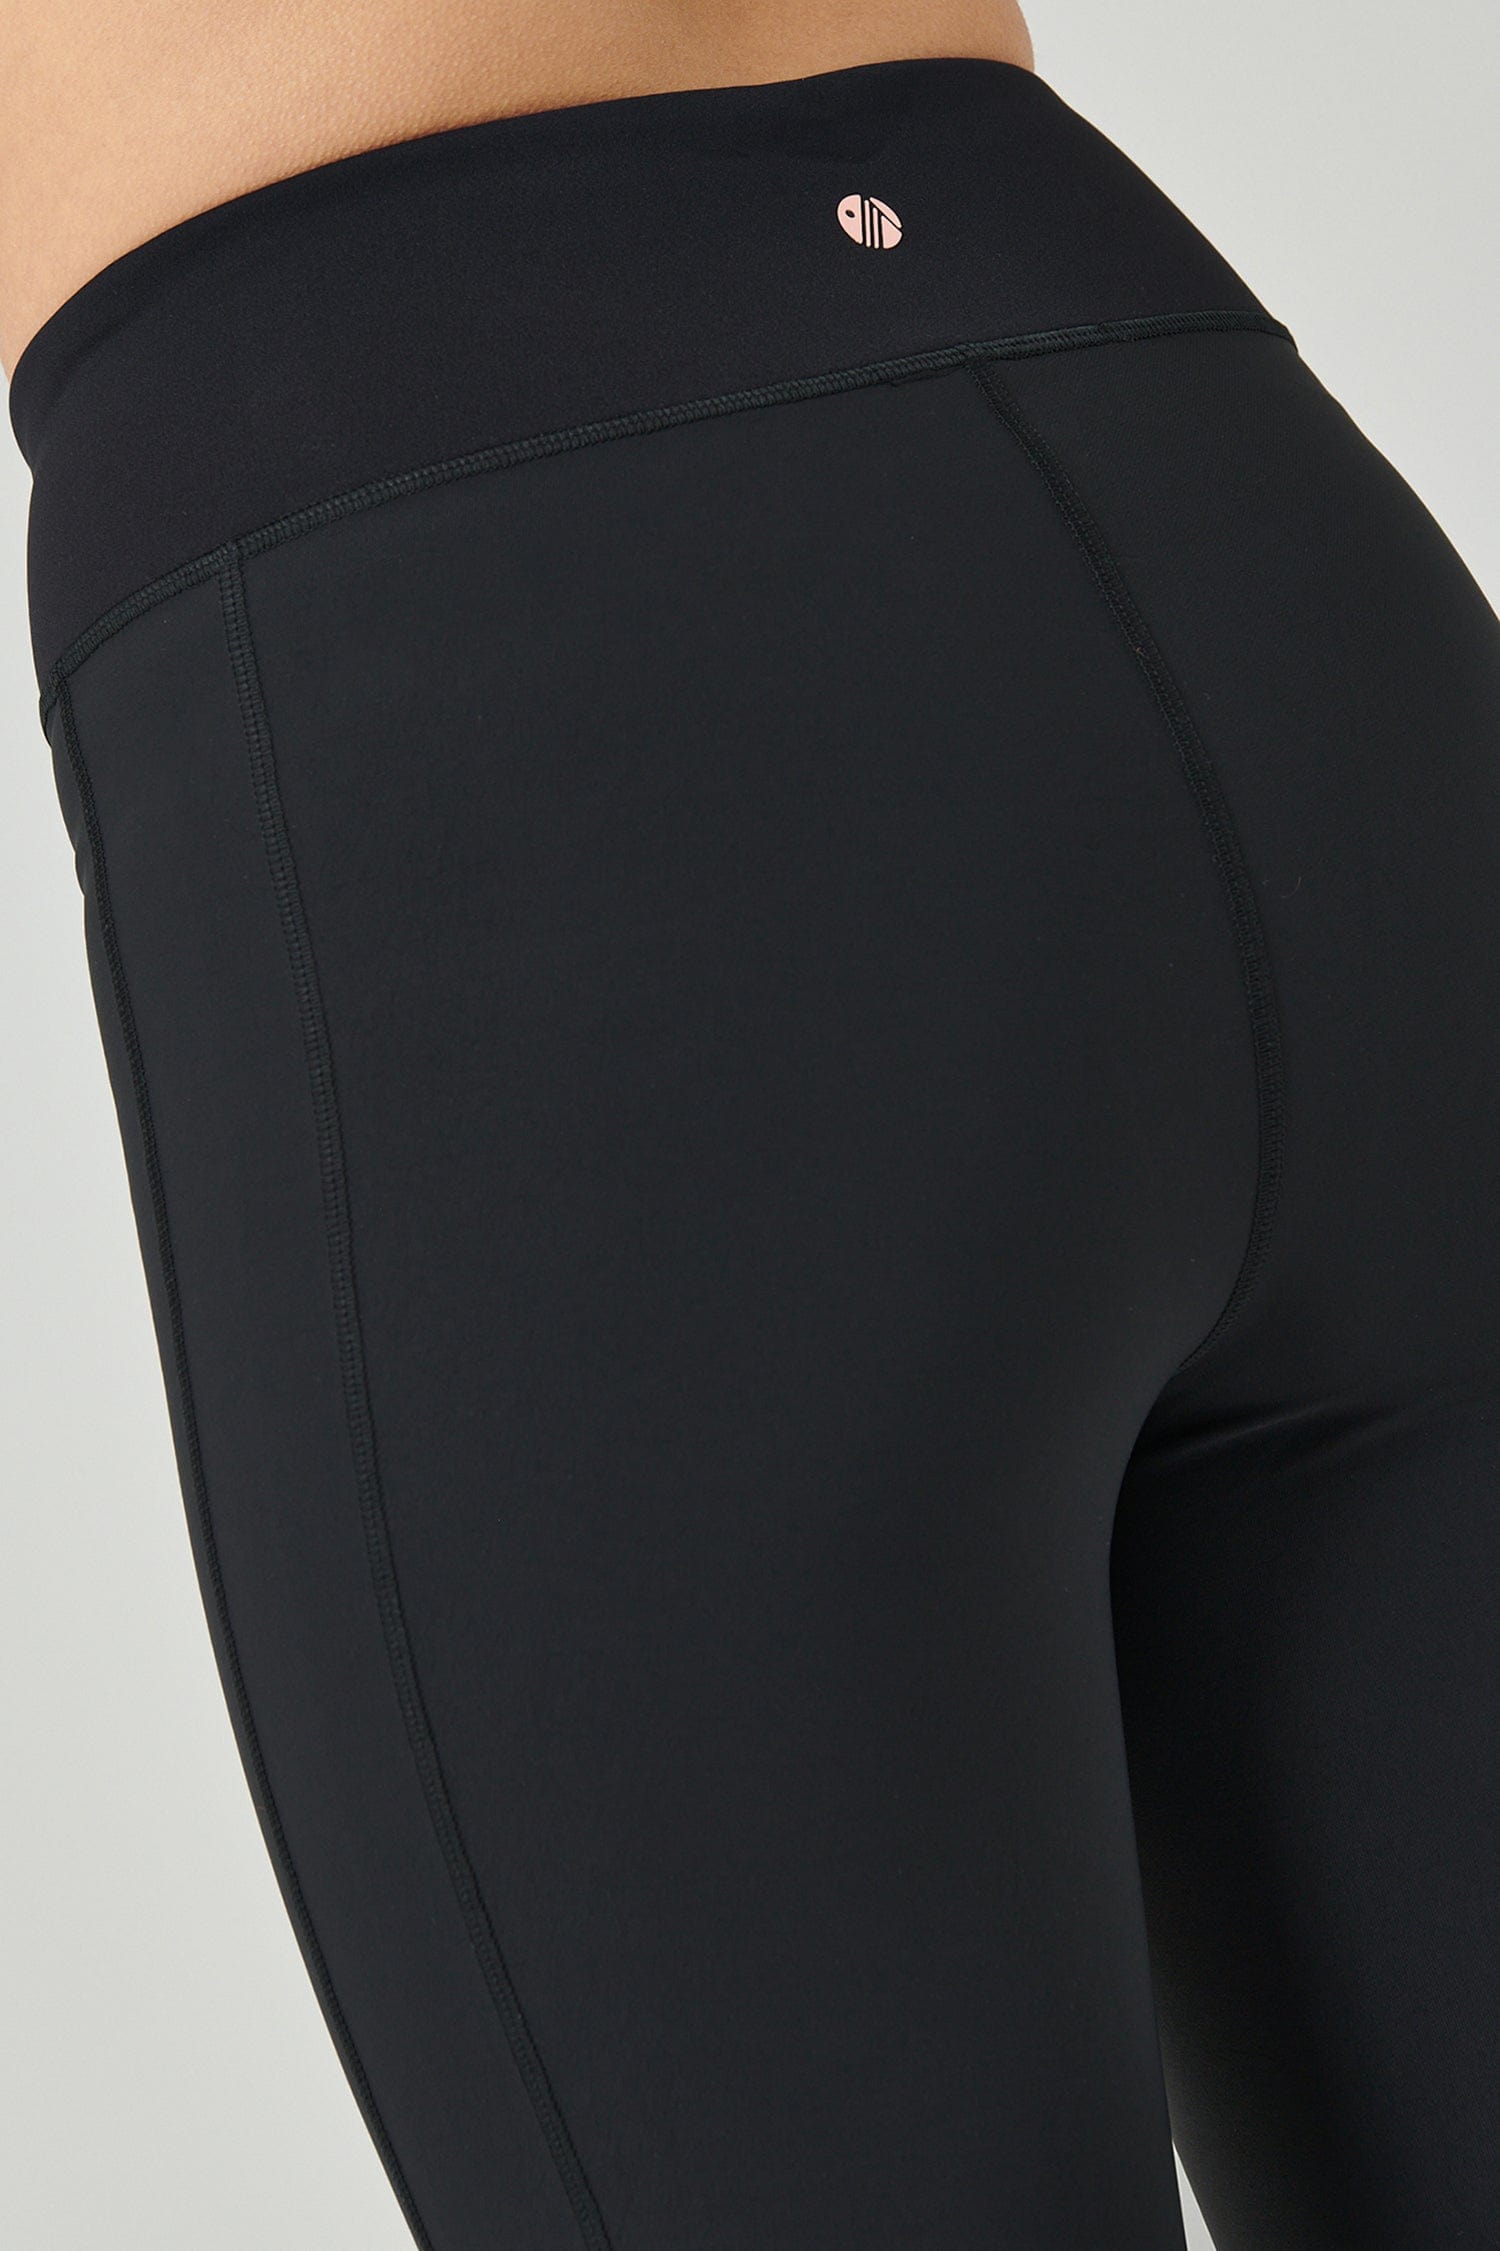 Women's long softshell leggings, black size XL